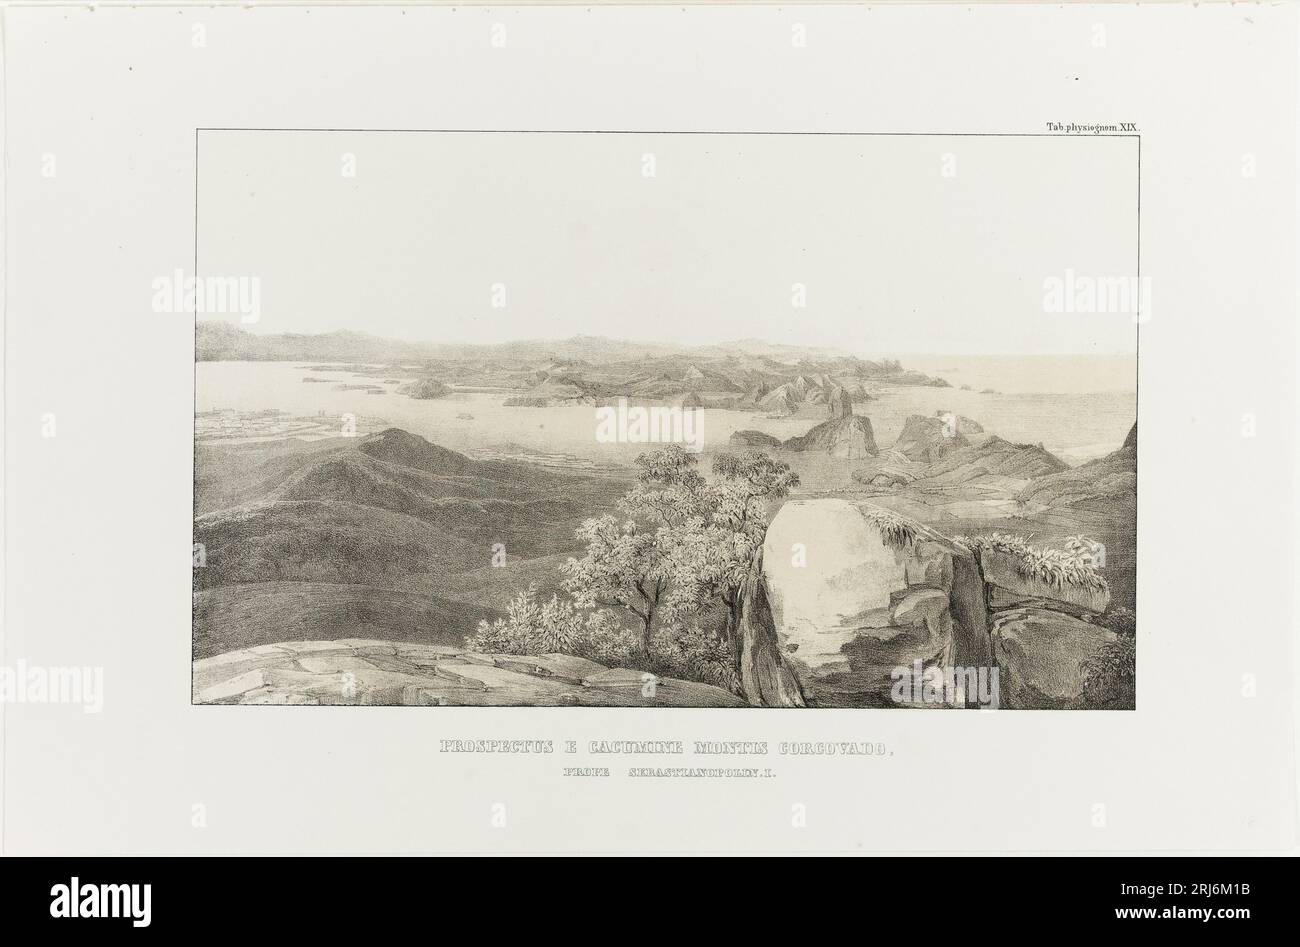 Prospectus e Cacumine Montis Corcovado, Prope Sebastianopolin. I presumably 1846 by August W. Eichler Stock Photo